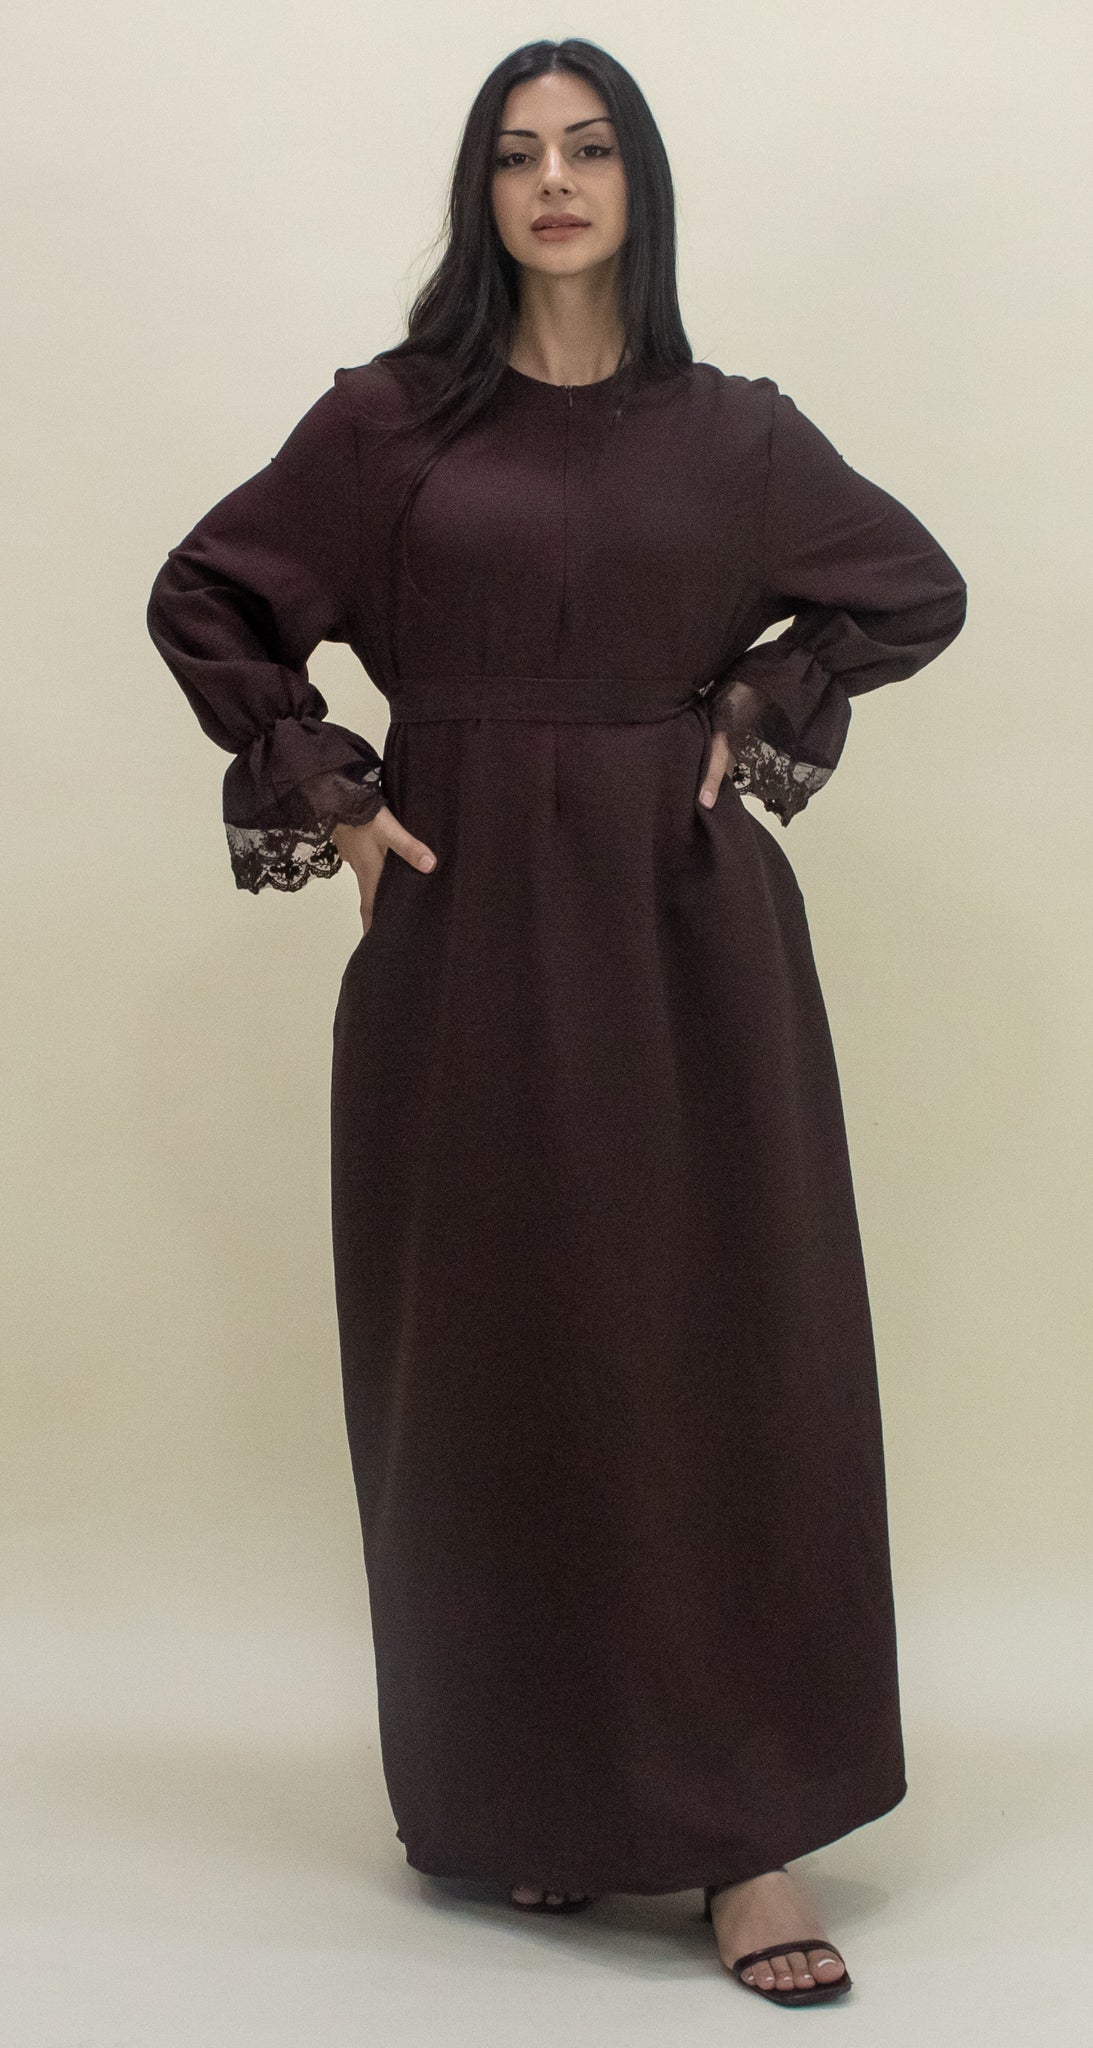 Lace Abaya - Chocolate Brown